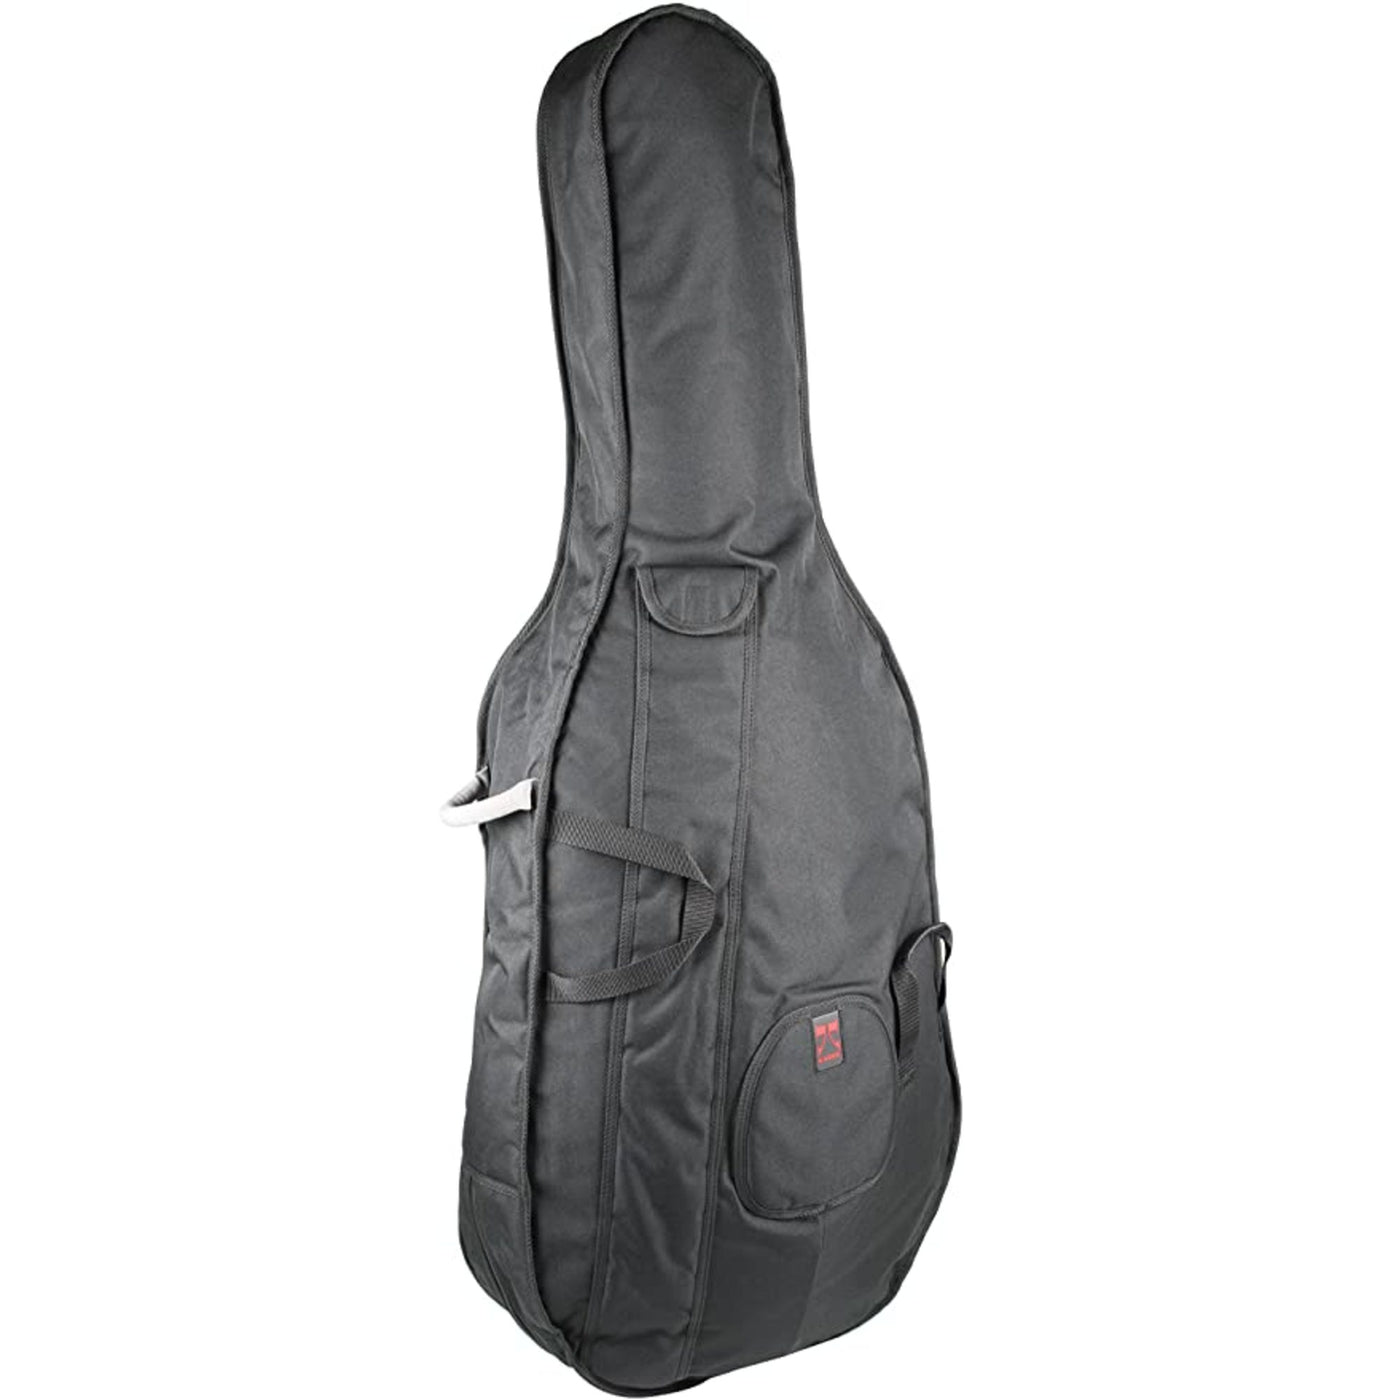 KacesUniversity Series 4/4 Size Cello Bag